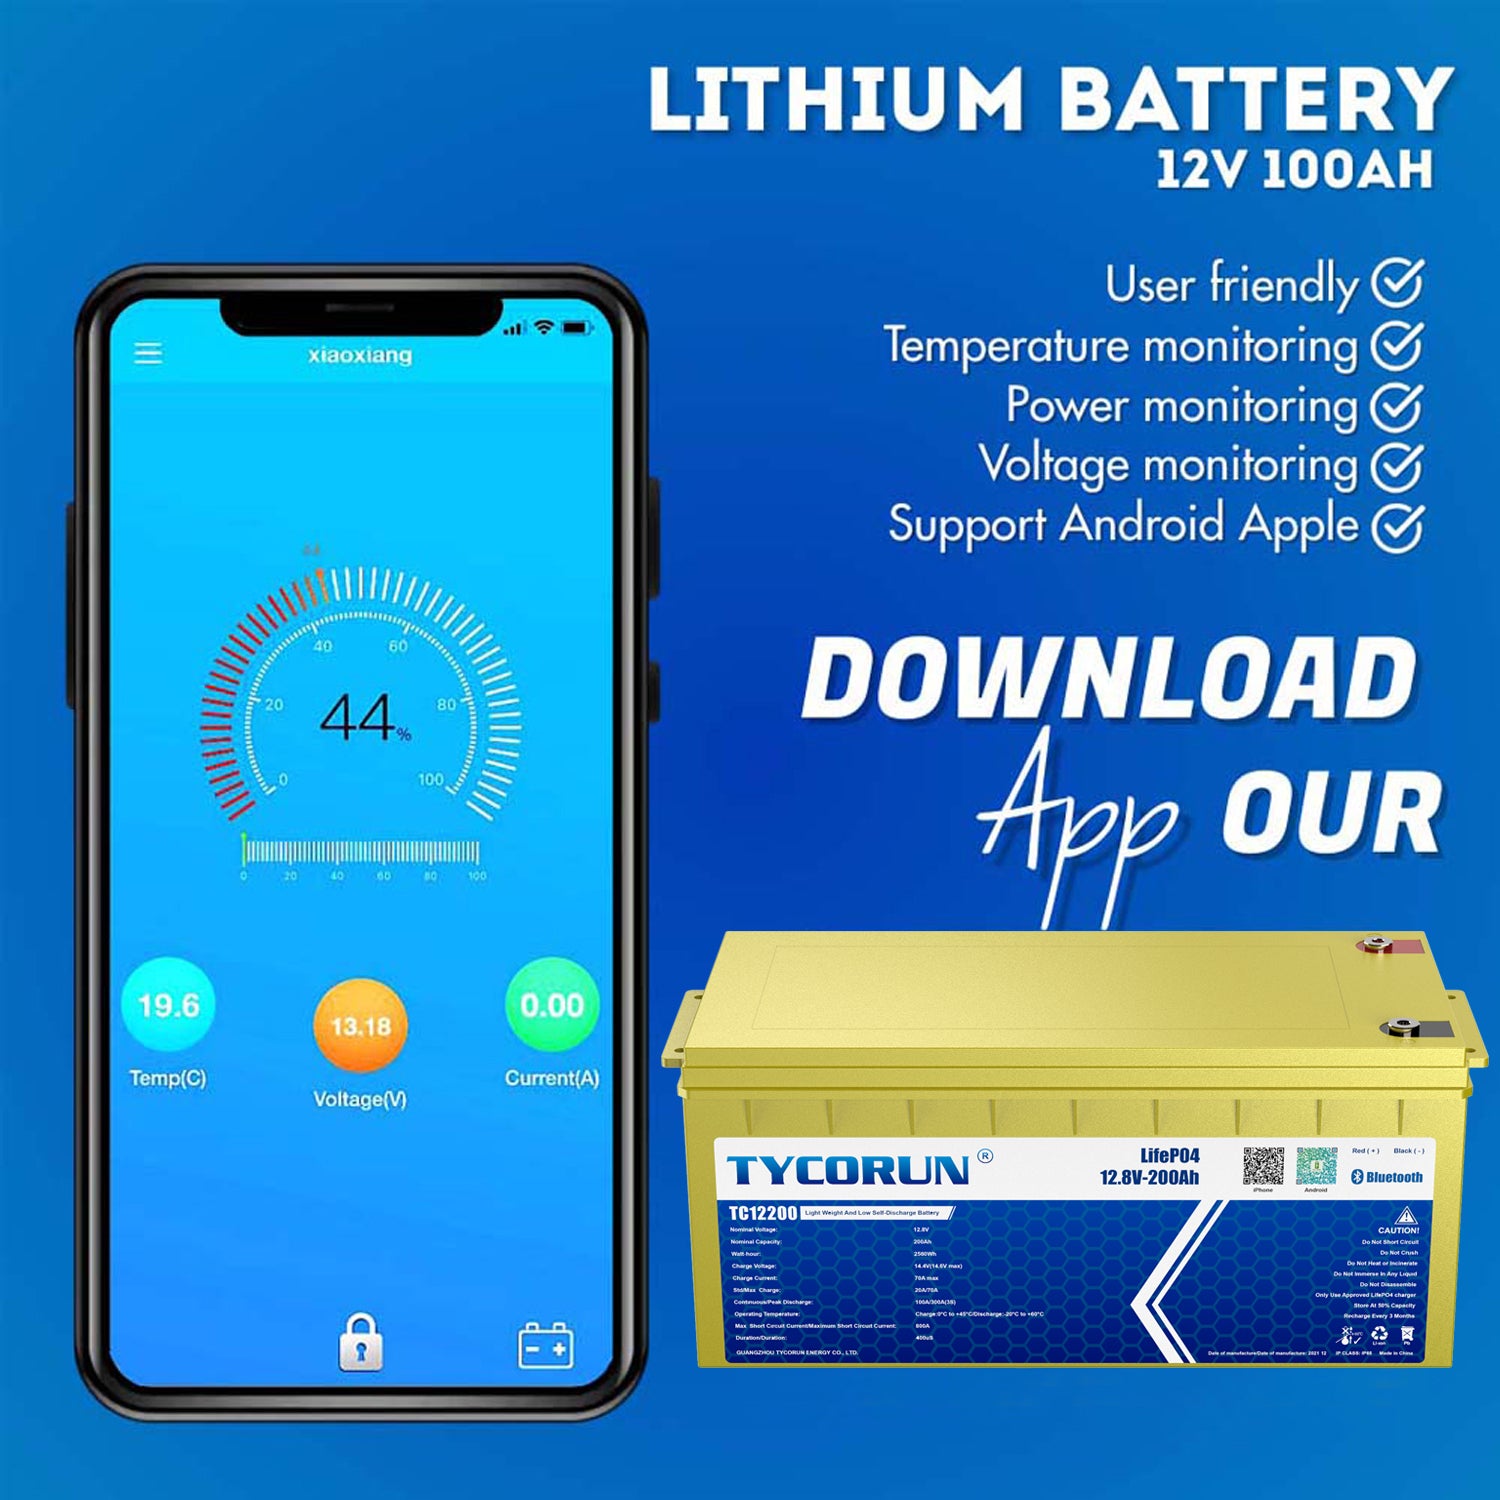 Tycorun Smart Bluetooth 12V 200Ah Lithium Deep Cycle Battery